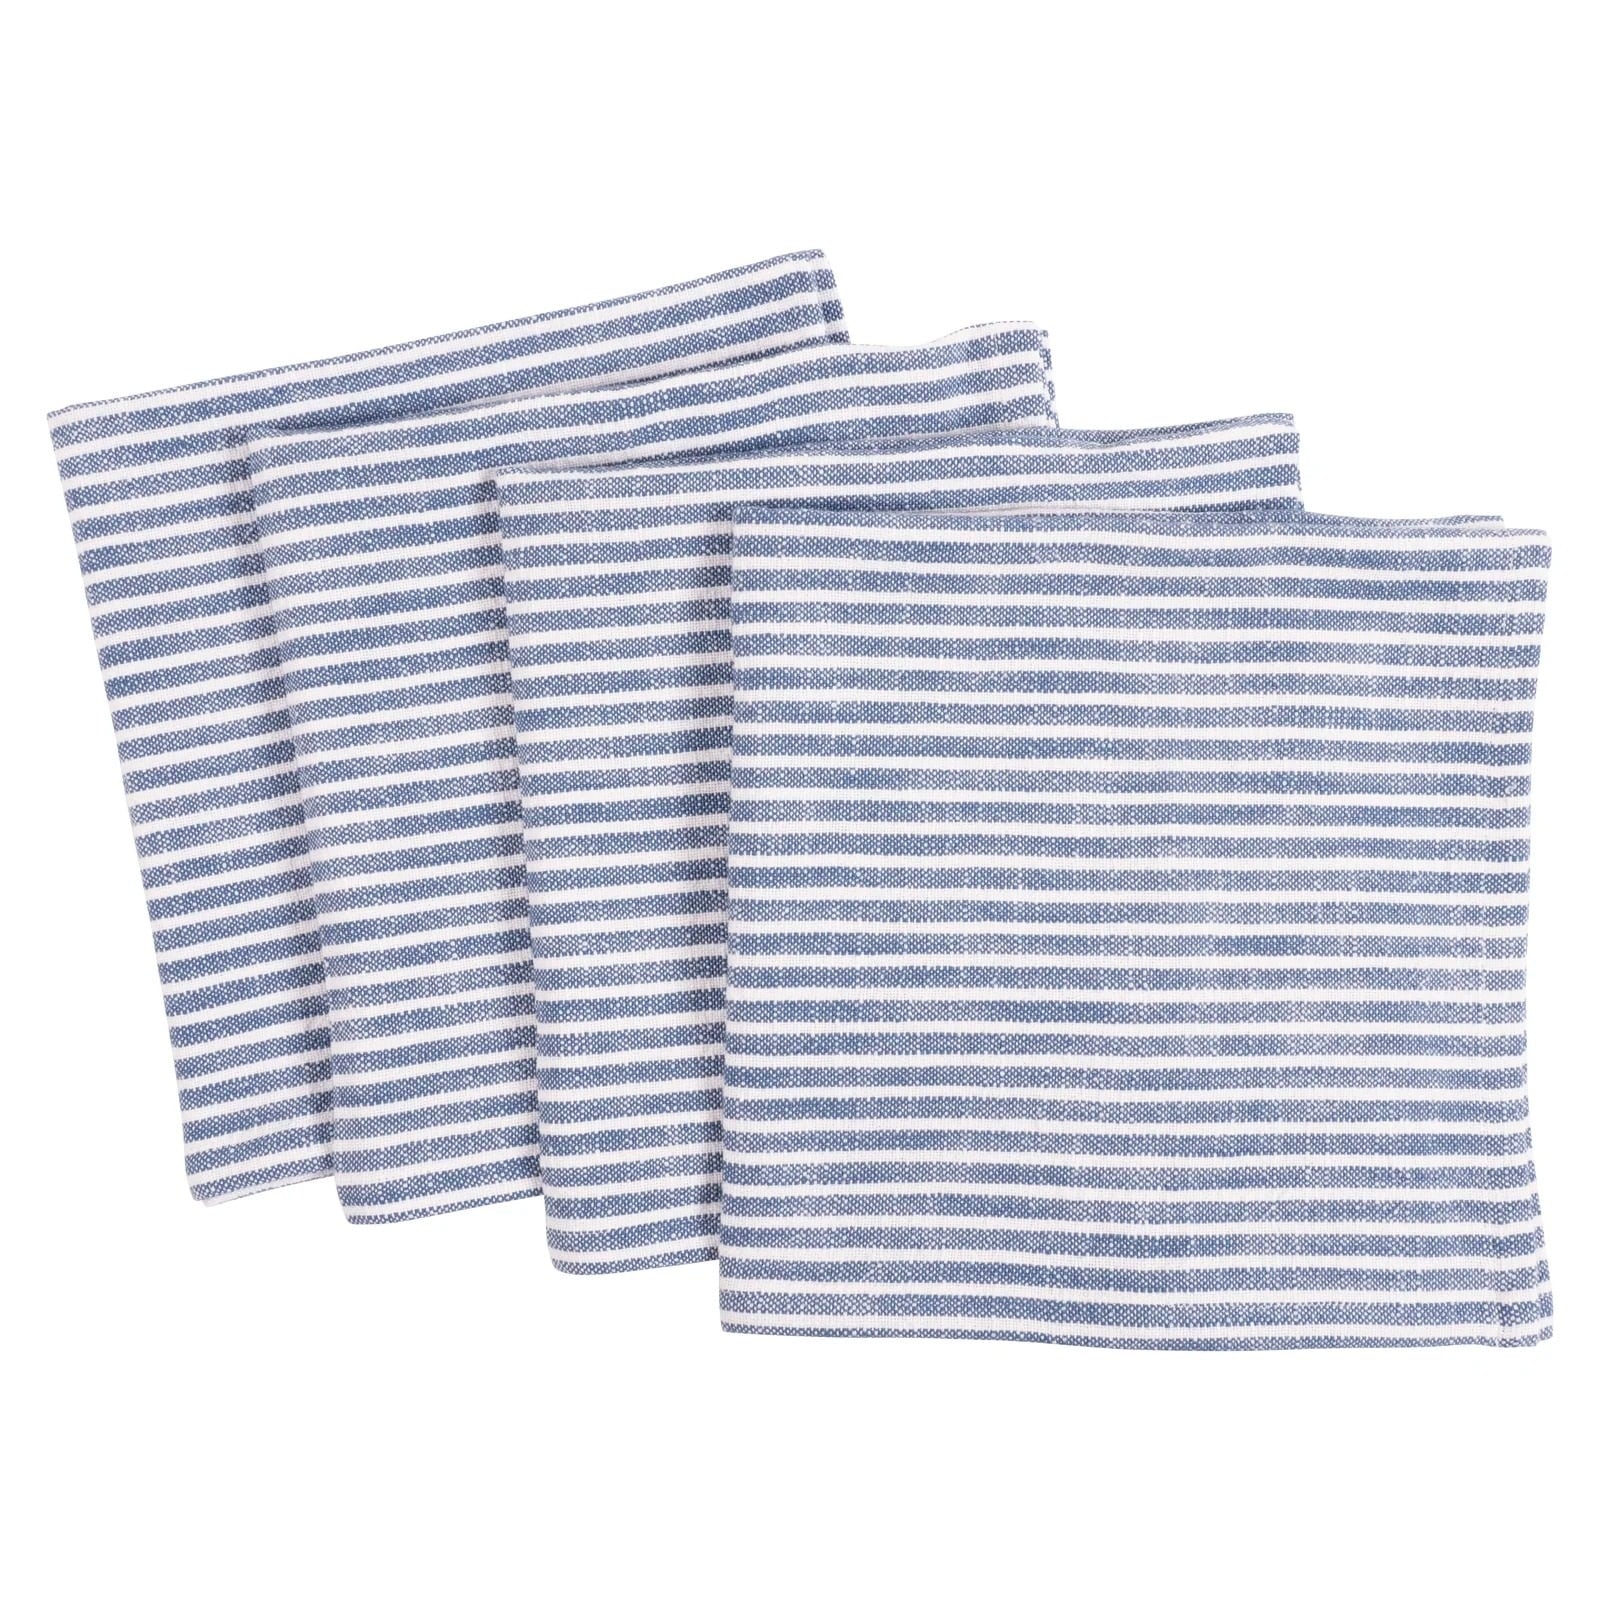 KAF Home Classic Farmhouse Stripe Kitchen Towels, Set of 12